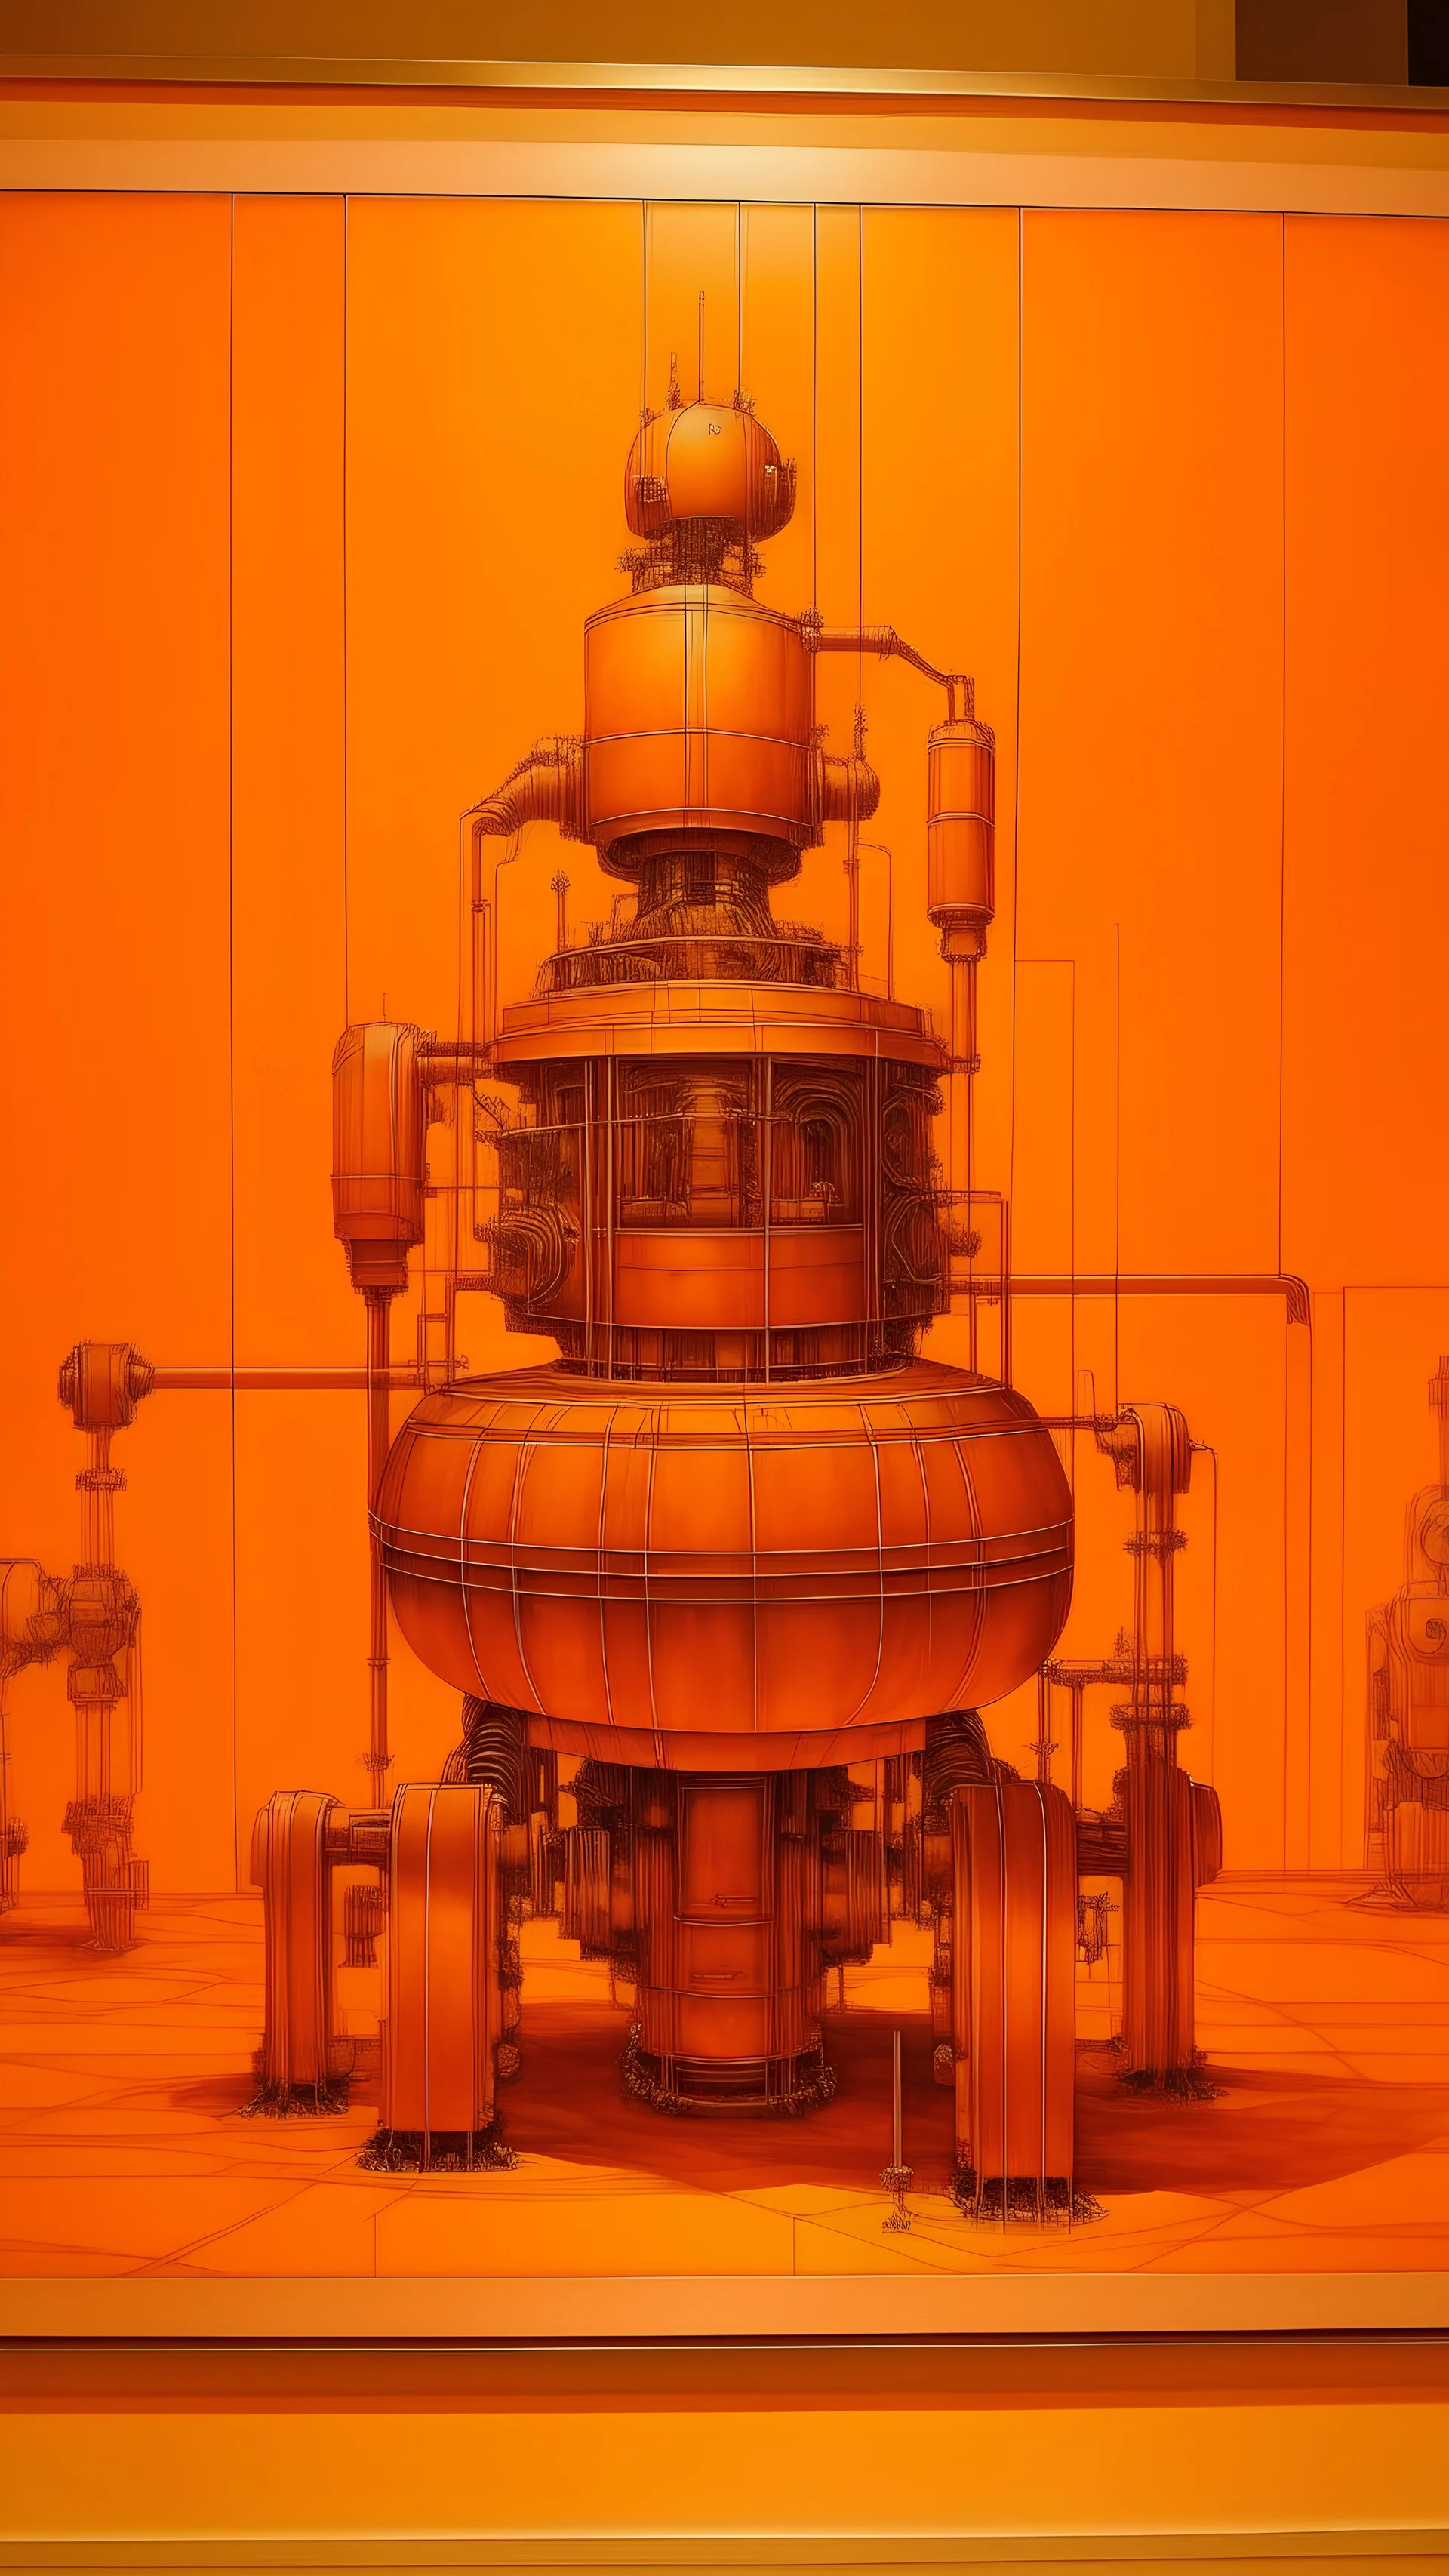 An orange robotic factory painted by Leonardo da Vinci